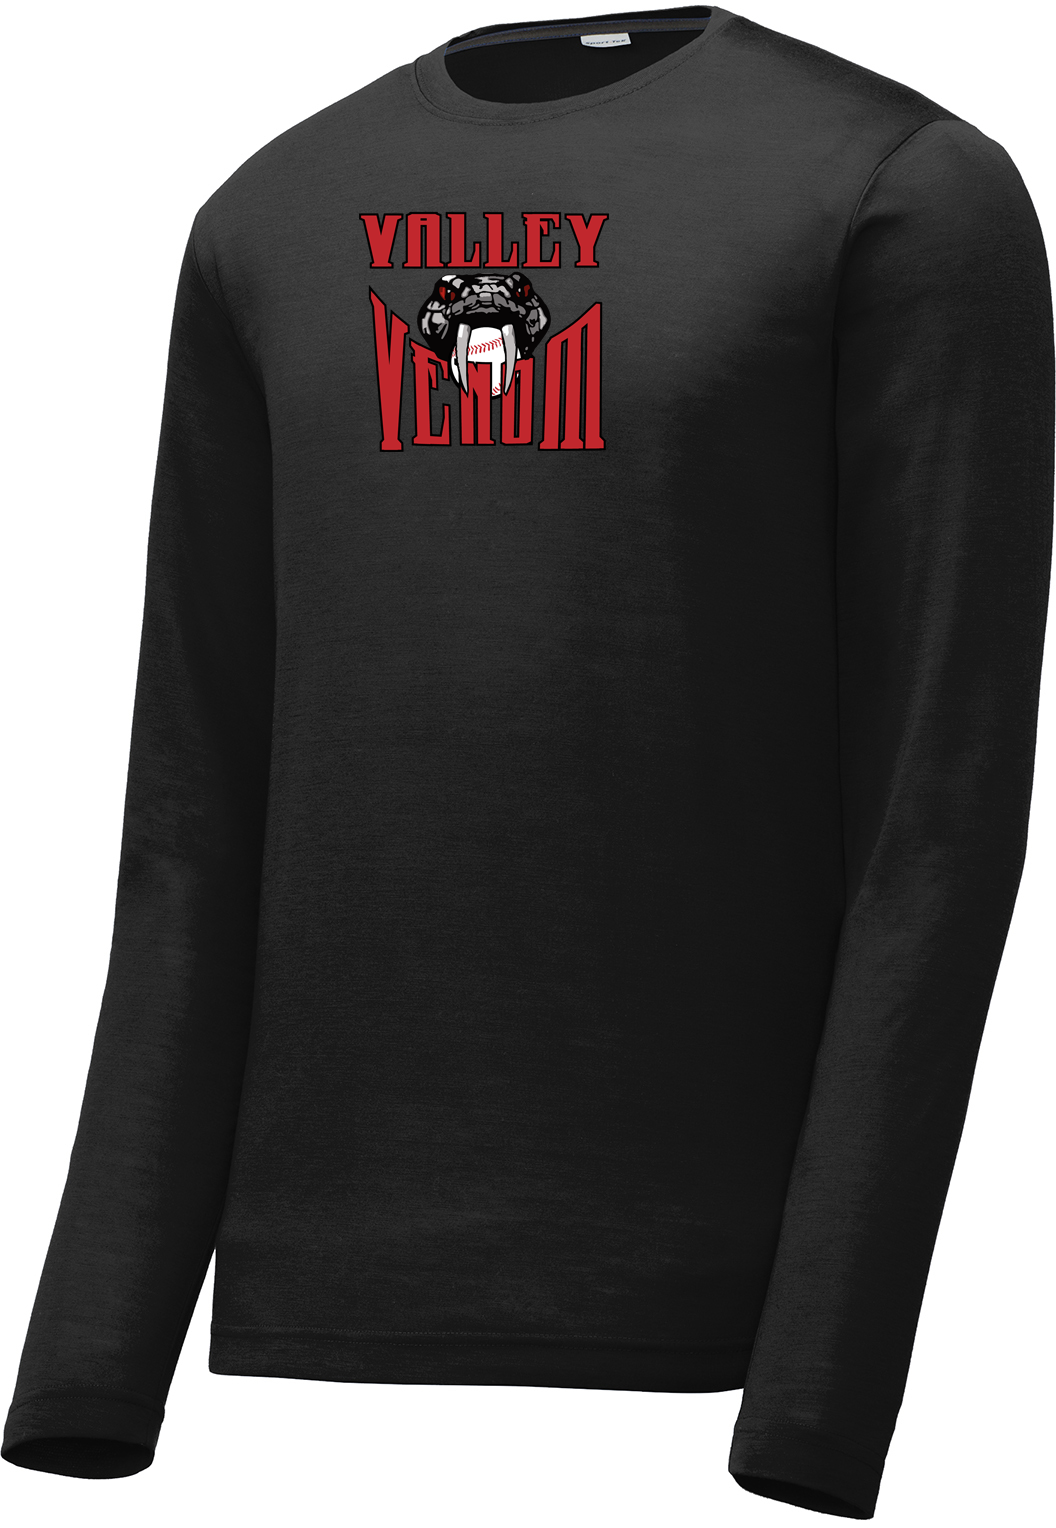 Valley Venom Baseball Long Sleeve CottonTouch Performance Shirt